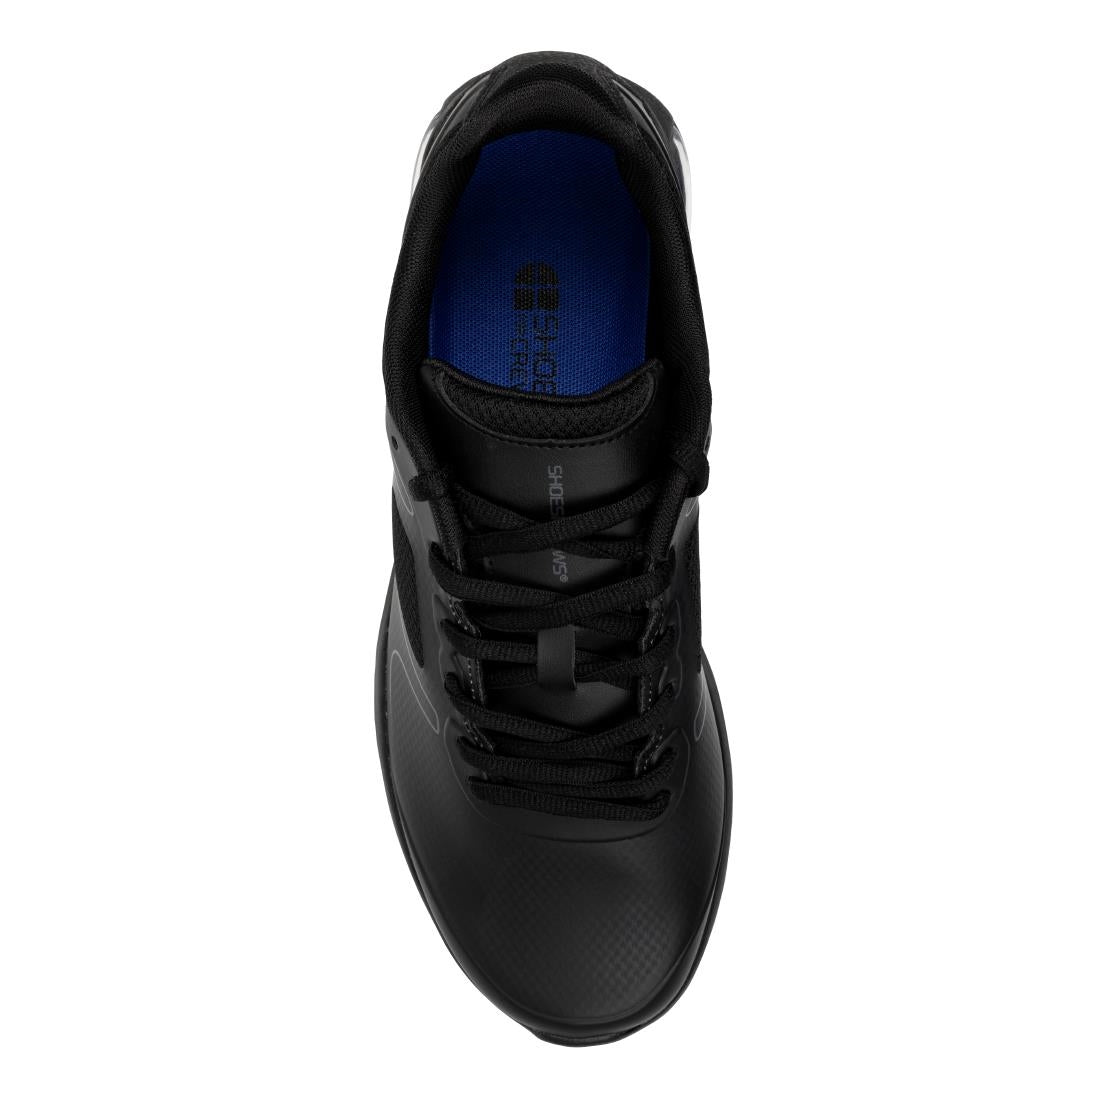 BB586-41 Shoes for Crews Men's Evolution Trainers Black Size 41